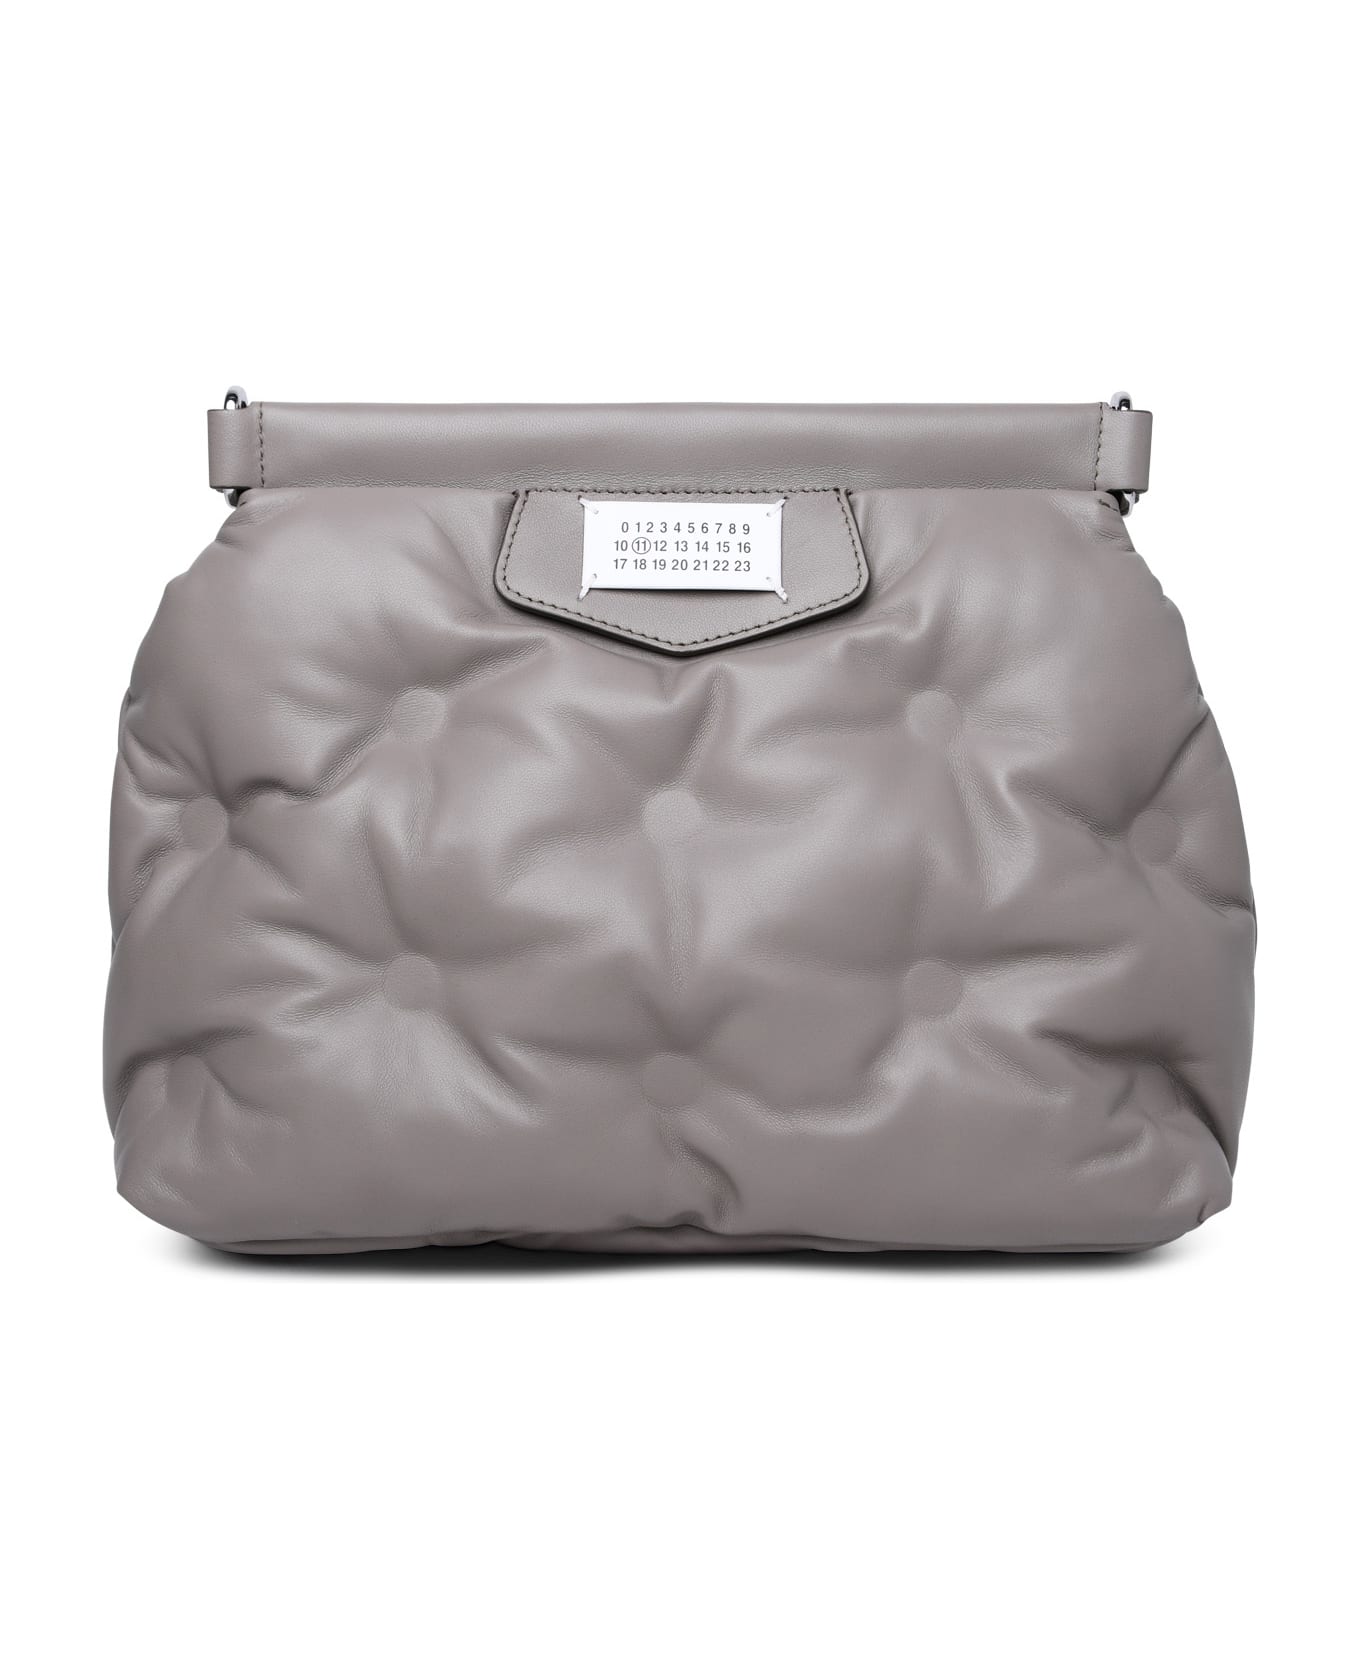 Maison Margiela 'glam Slam' Taupe Nappa Leather Crossbody Bag - Calce クラッチバッグ